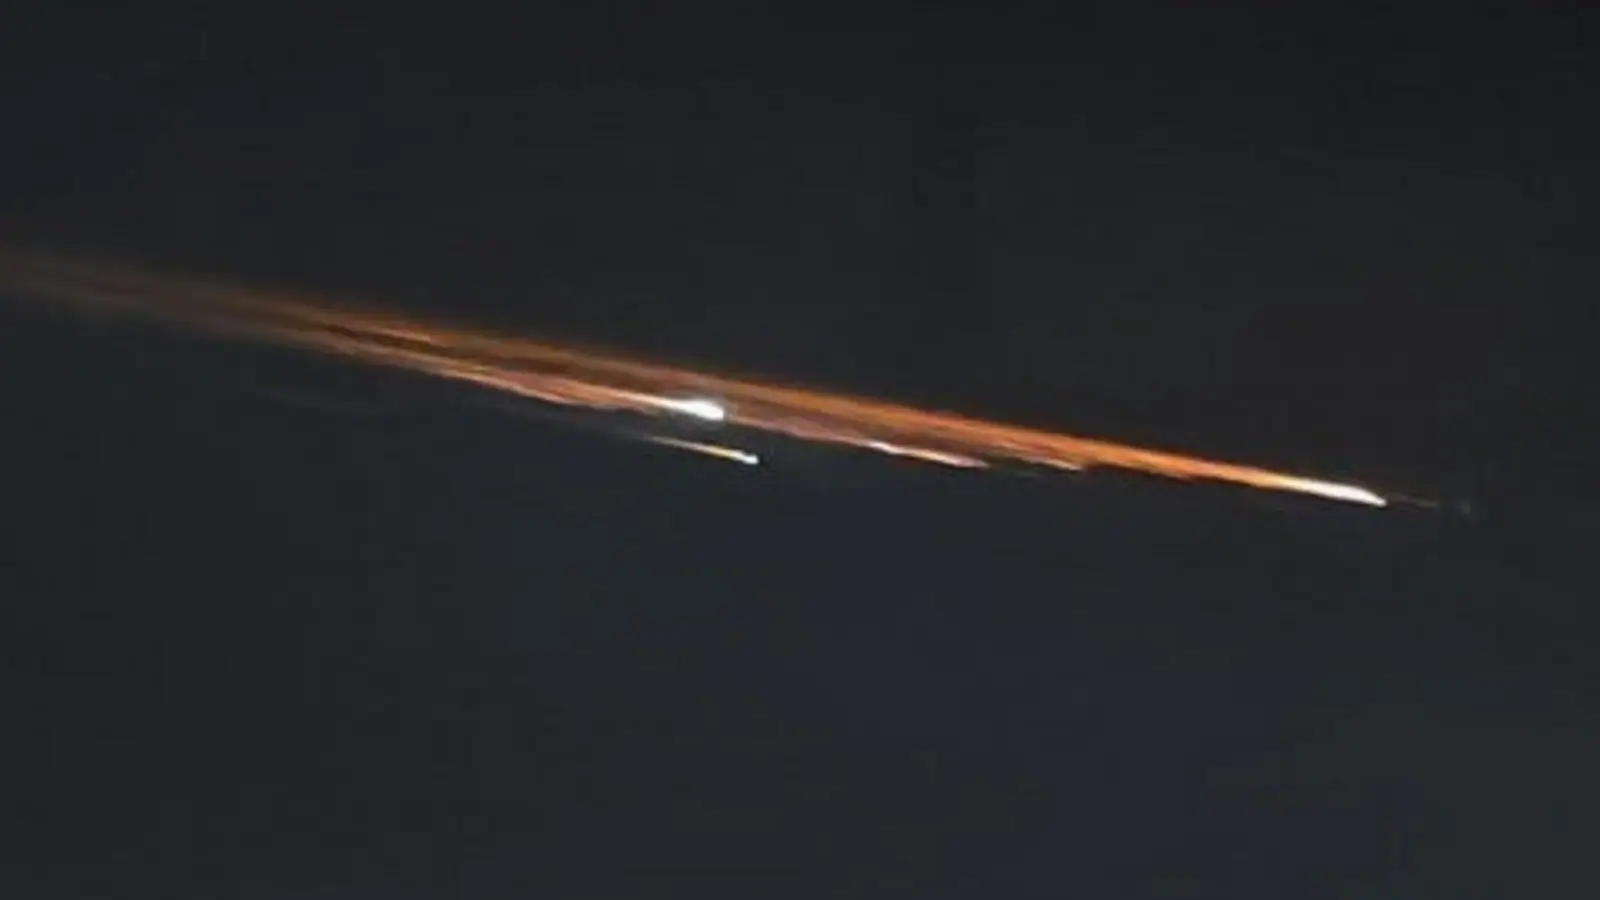 Meteor shower or space debris? Experts weigh in as blazing streaks light up